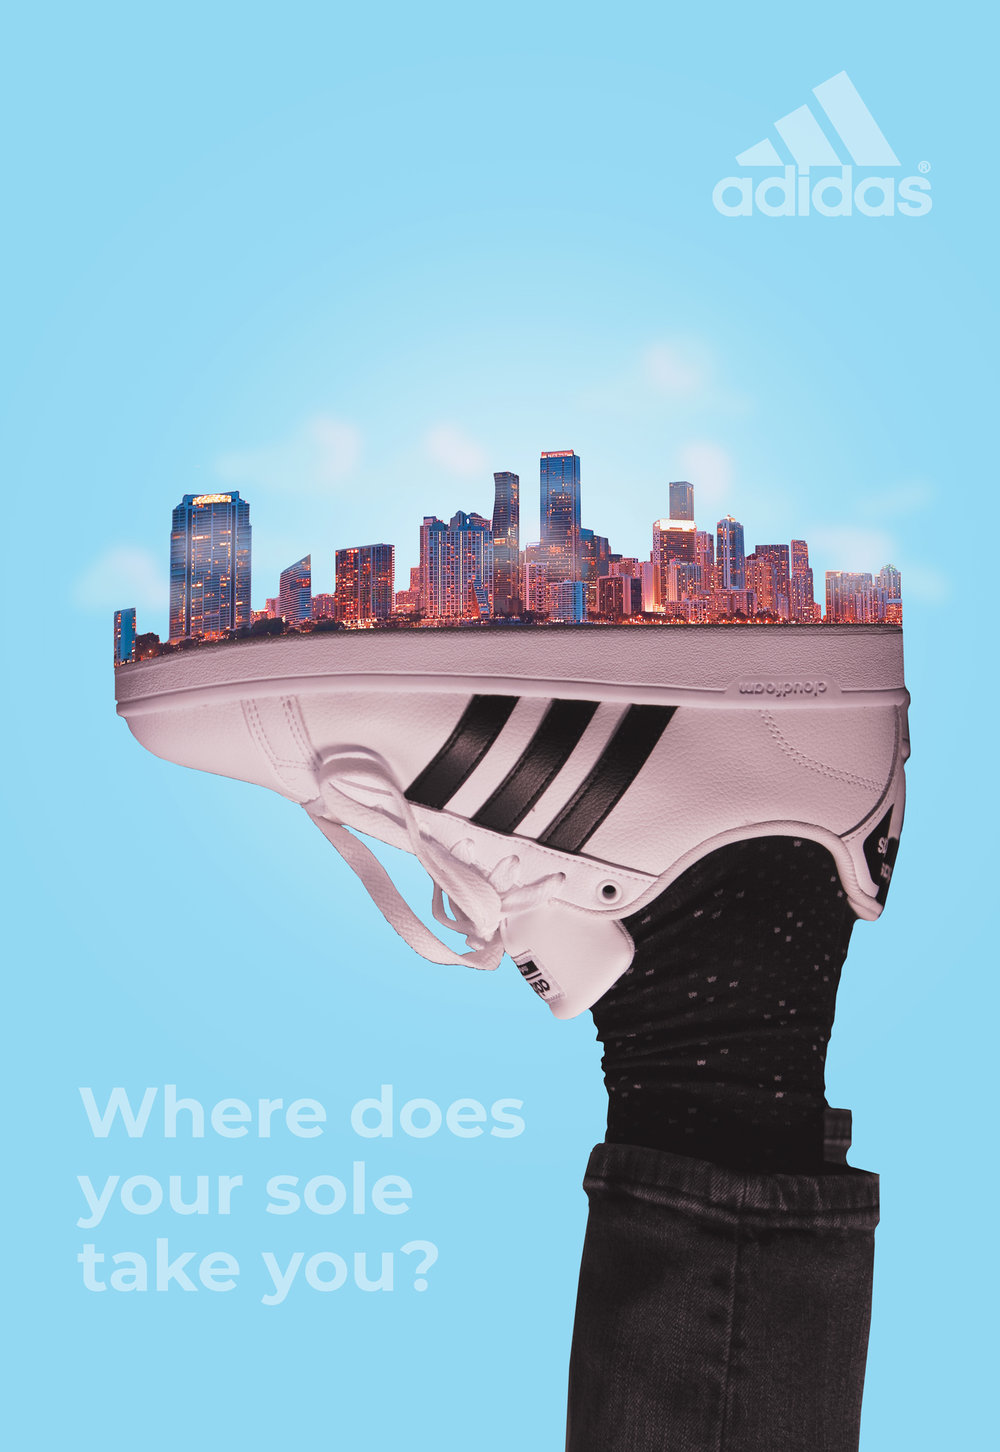 Editor famélico freno Adidas Shoes Ad Series — Emily Wood